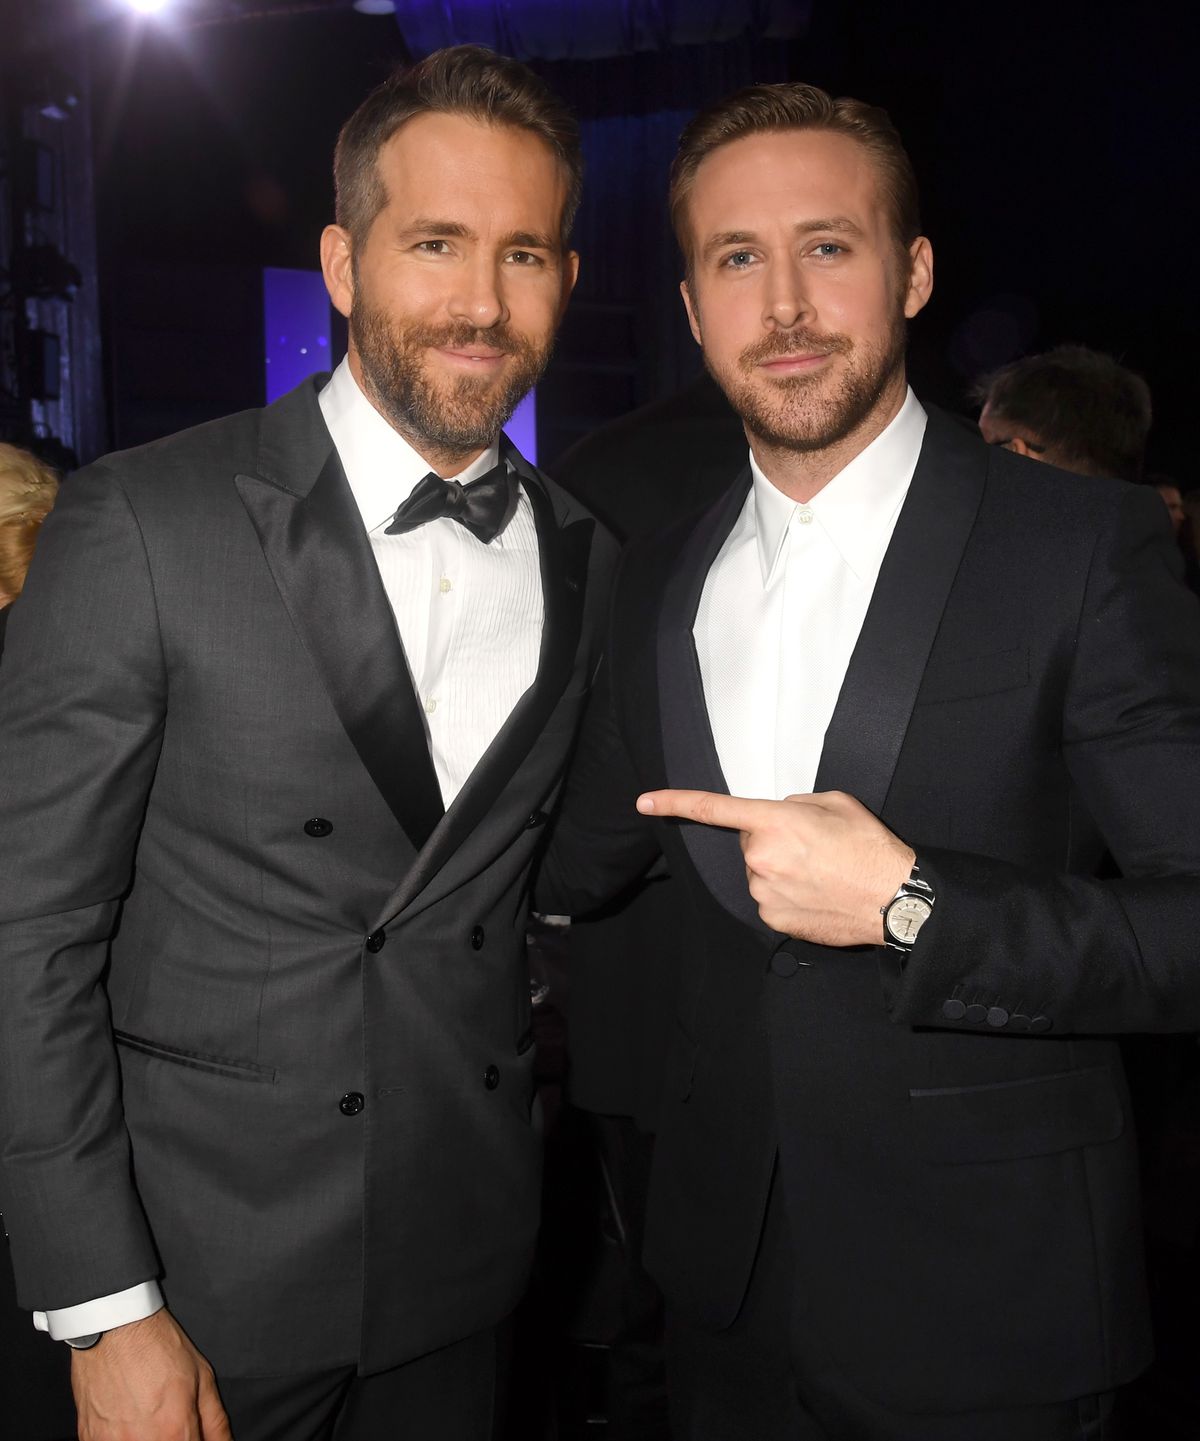 Actors Ryan Reynolds (L) attend Ryan Gosling attend The 22nd Annual Critics' Choice Awards at Barker Hangar on December 11, 2016 in Santa Monica, California.